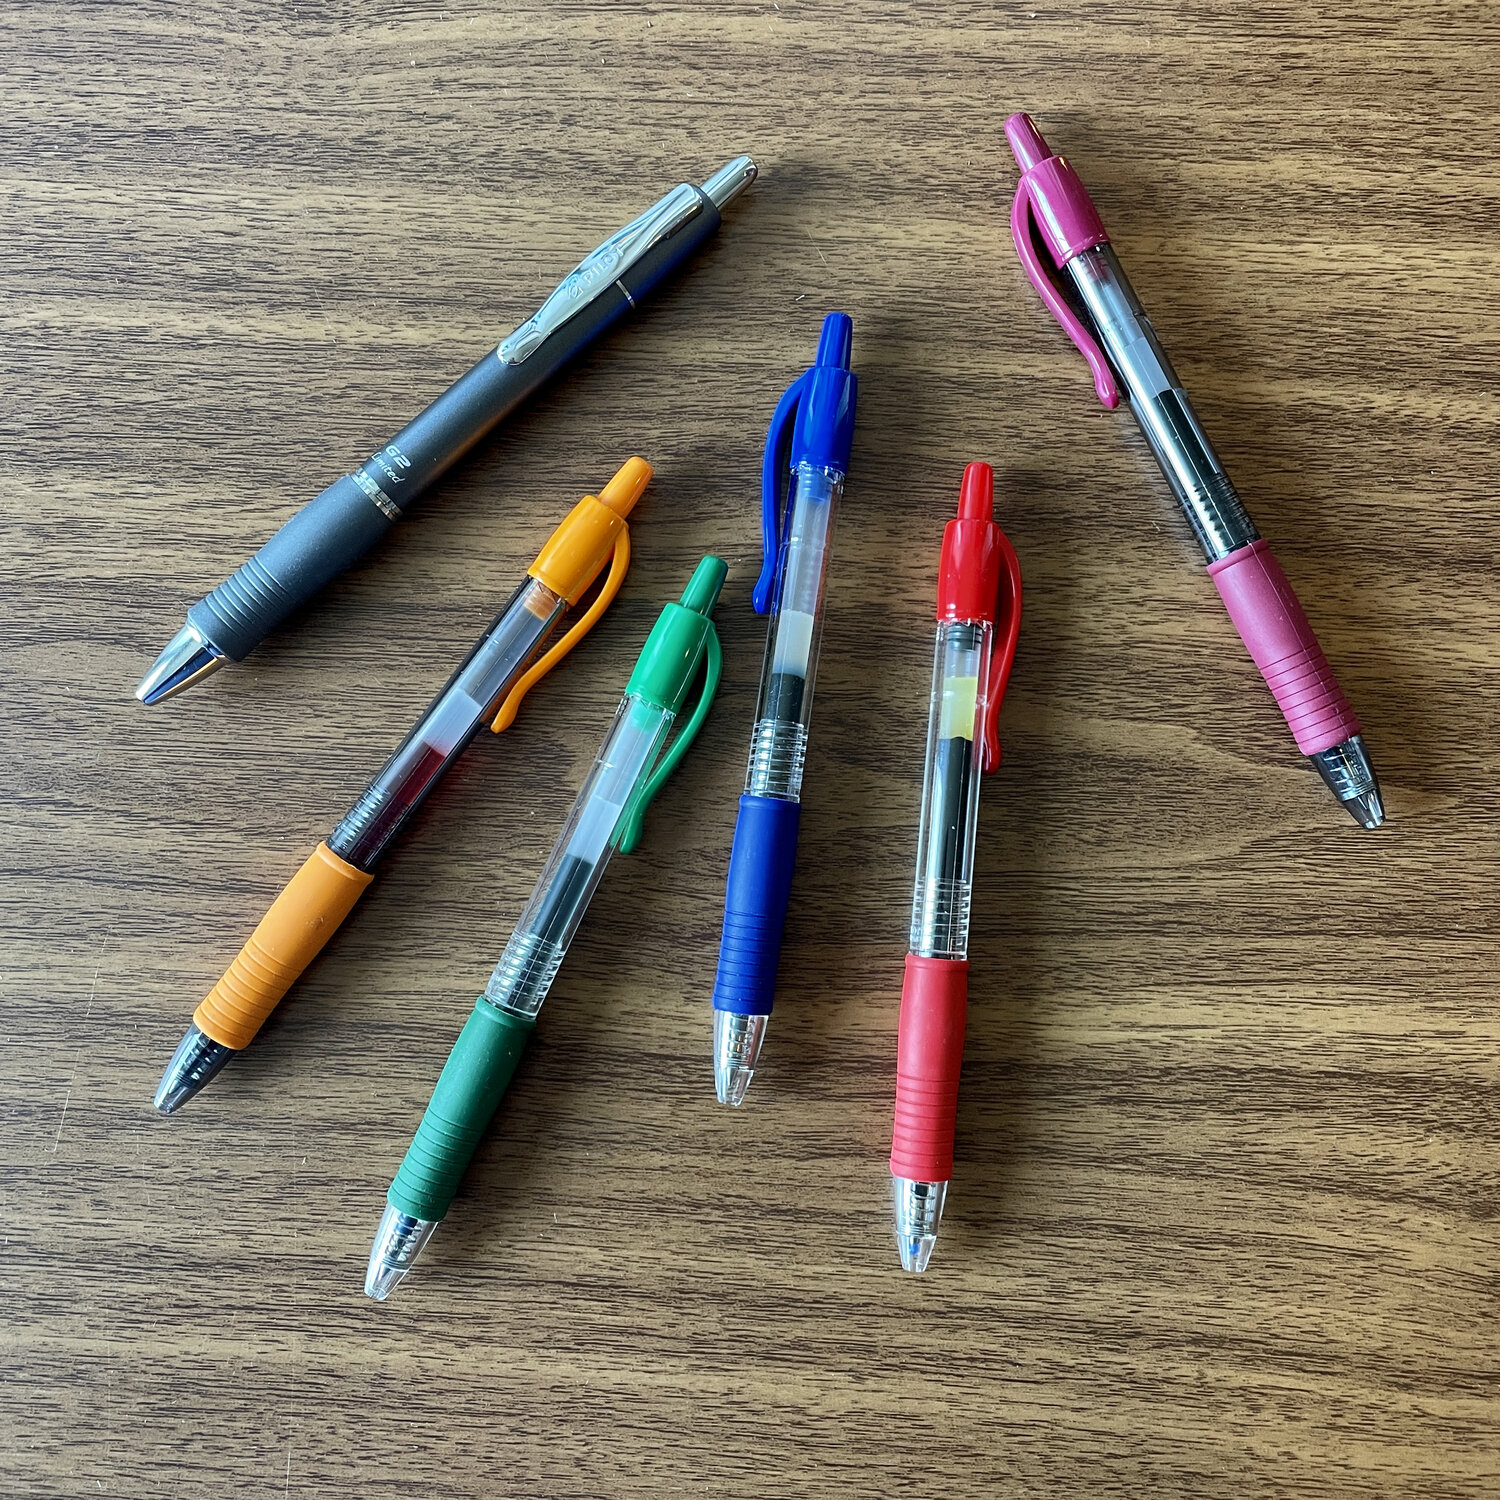 Enjoying Your PILOT Fountain Pen - Different Ways to Refill